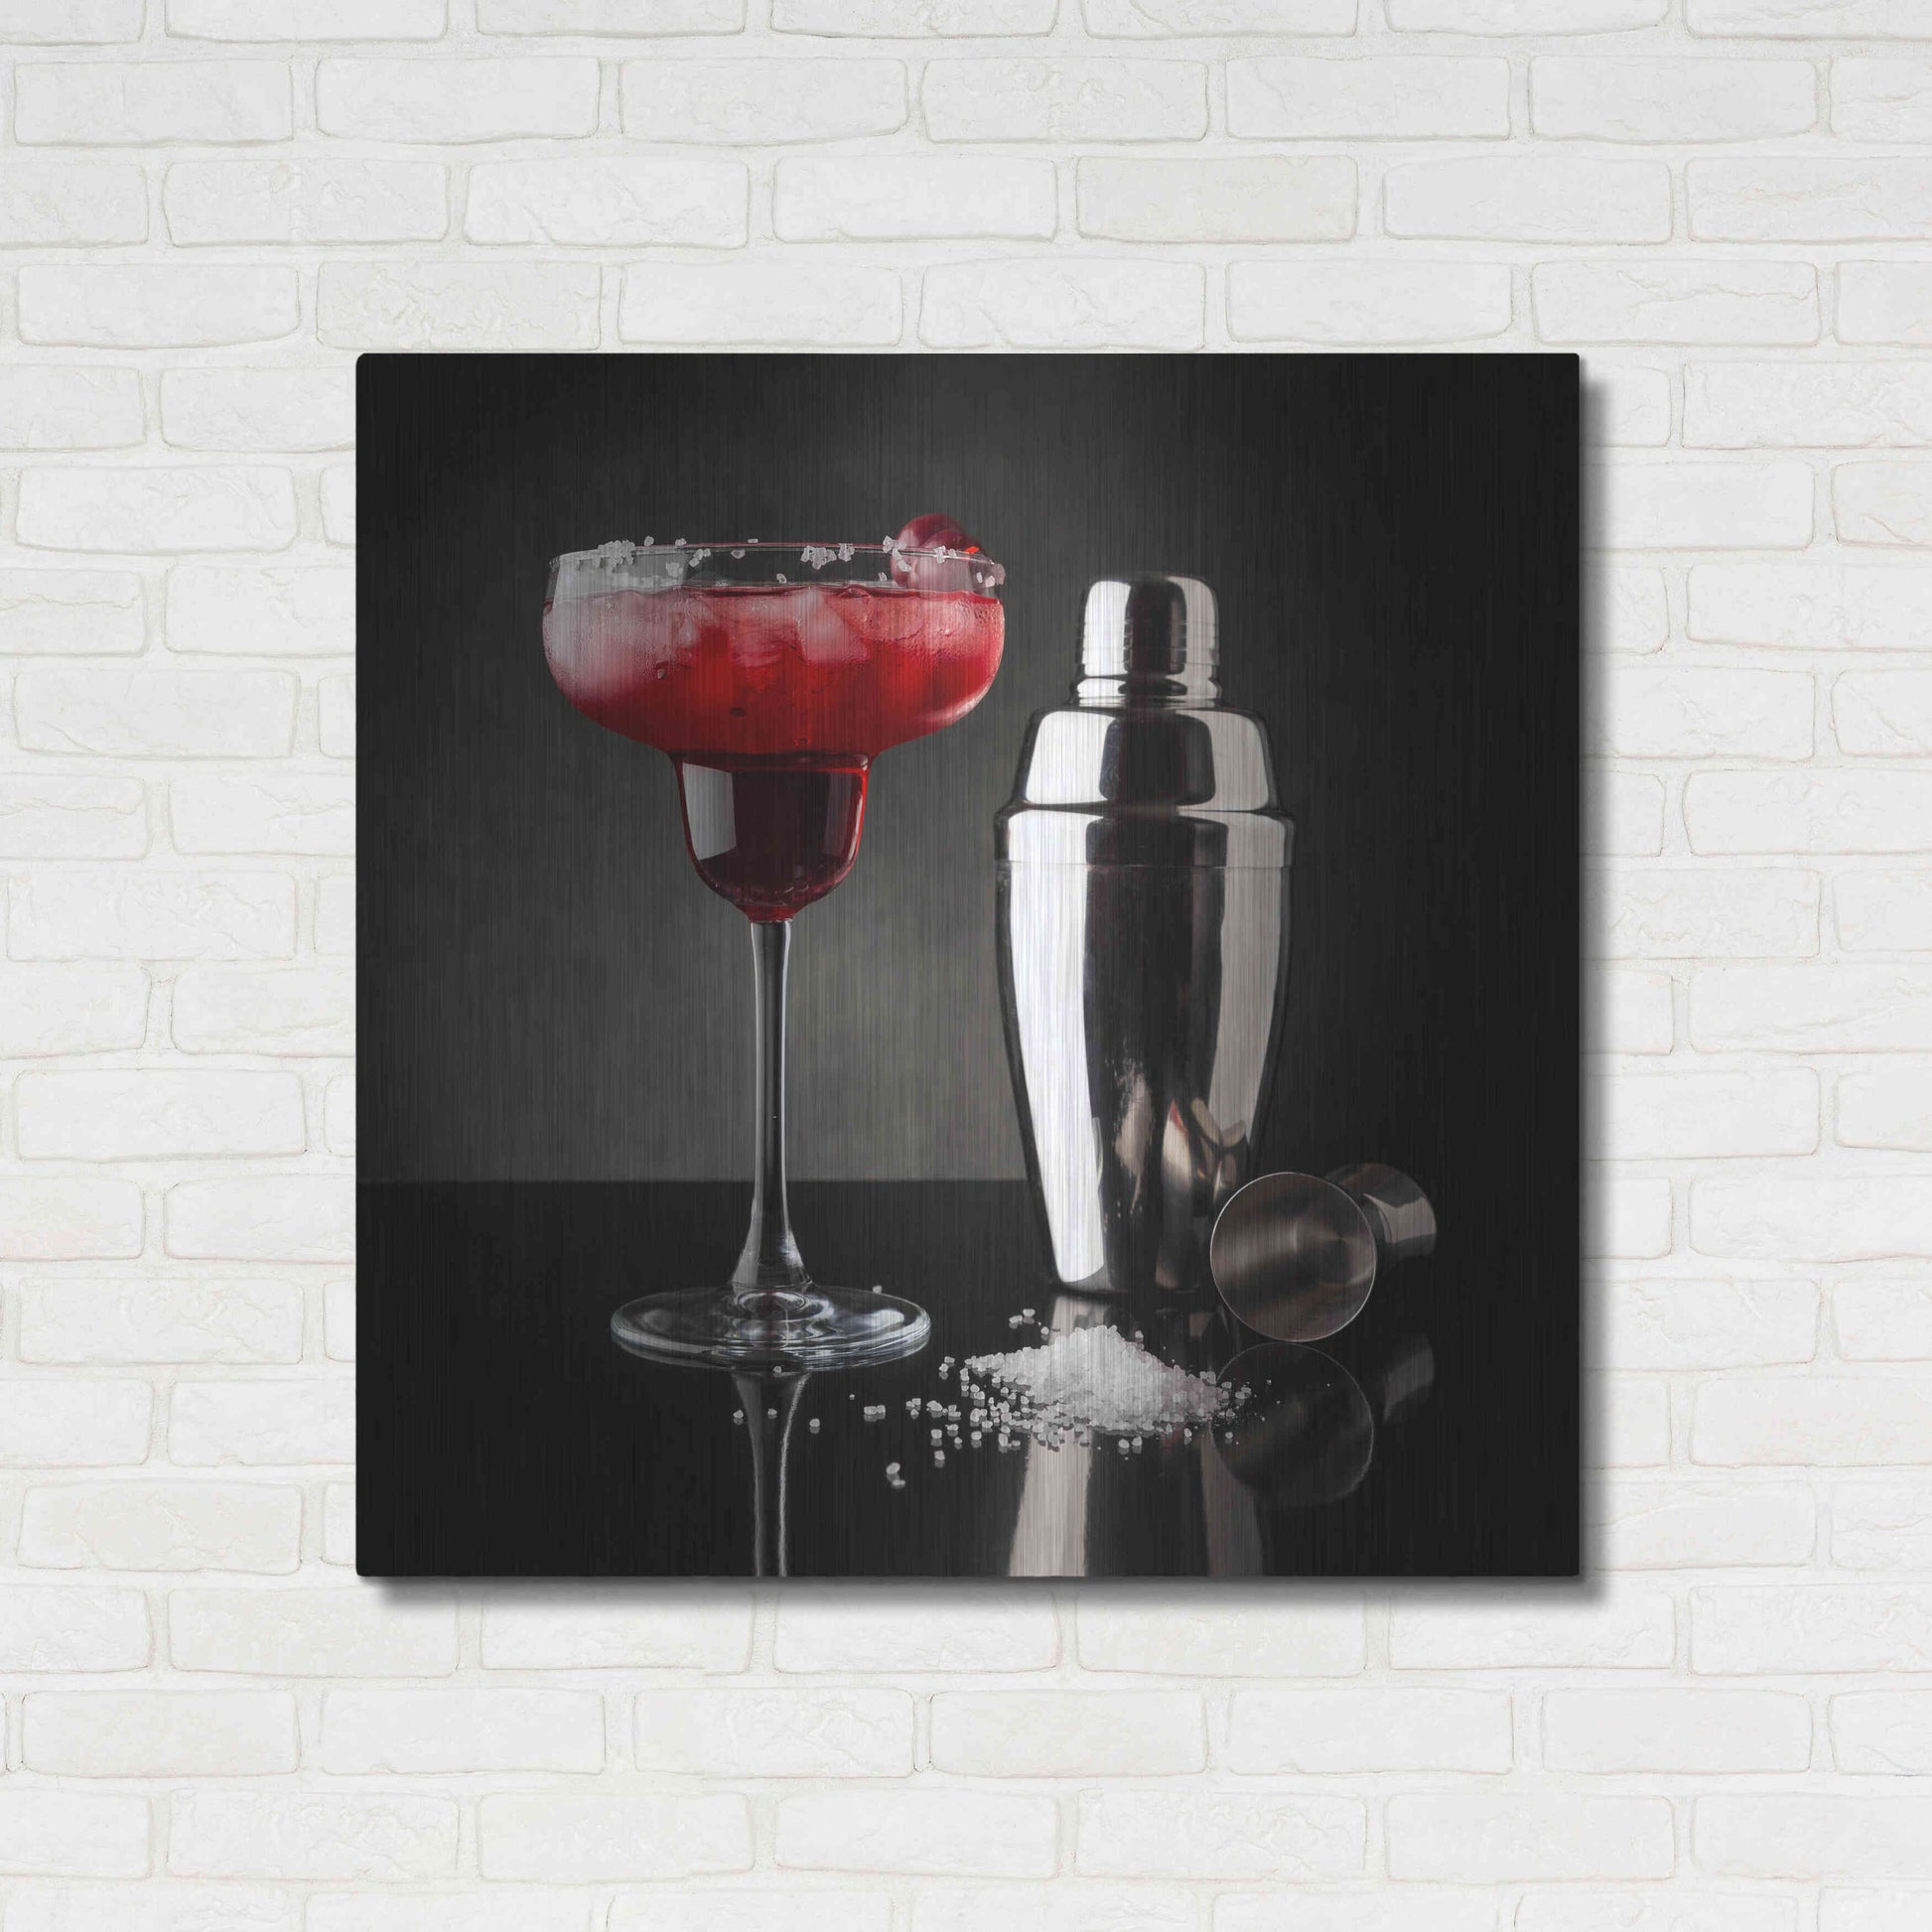 Luxe Metal Art 'Cherry Margarita' by Epic Portfolio, Metal Wall Art,36x36